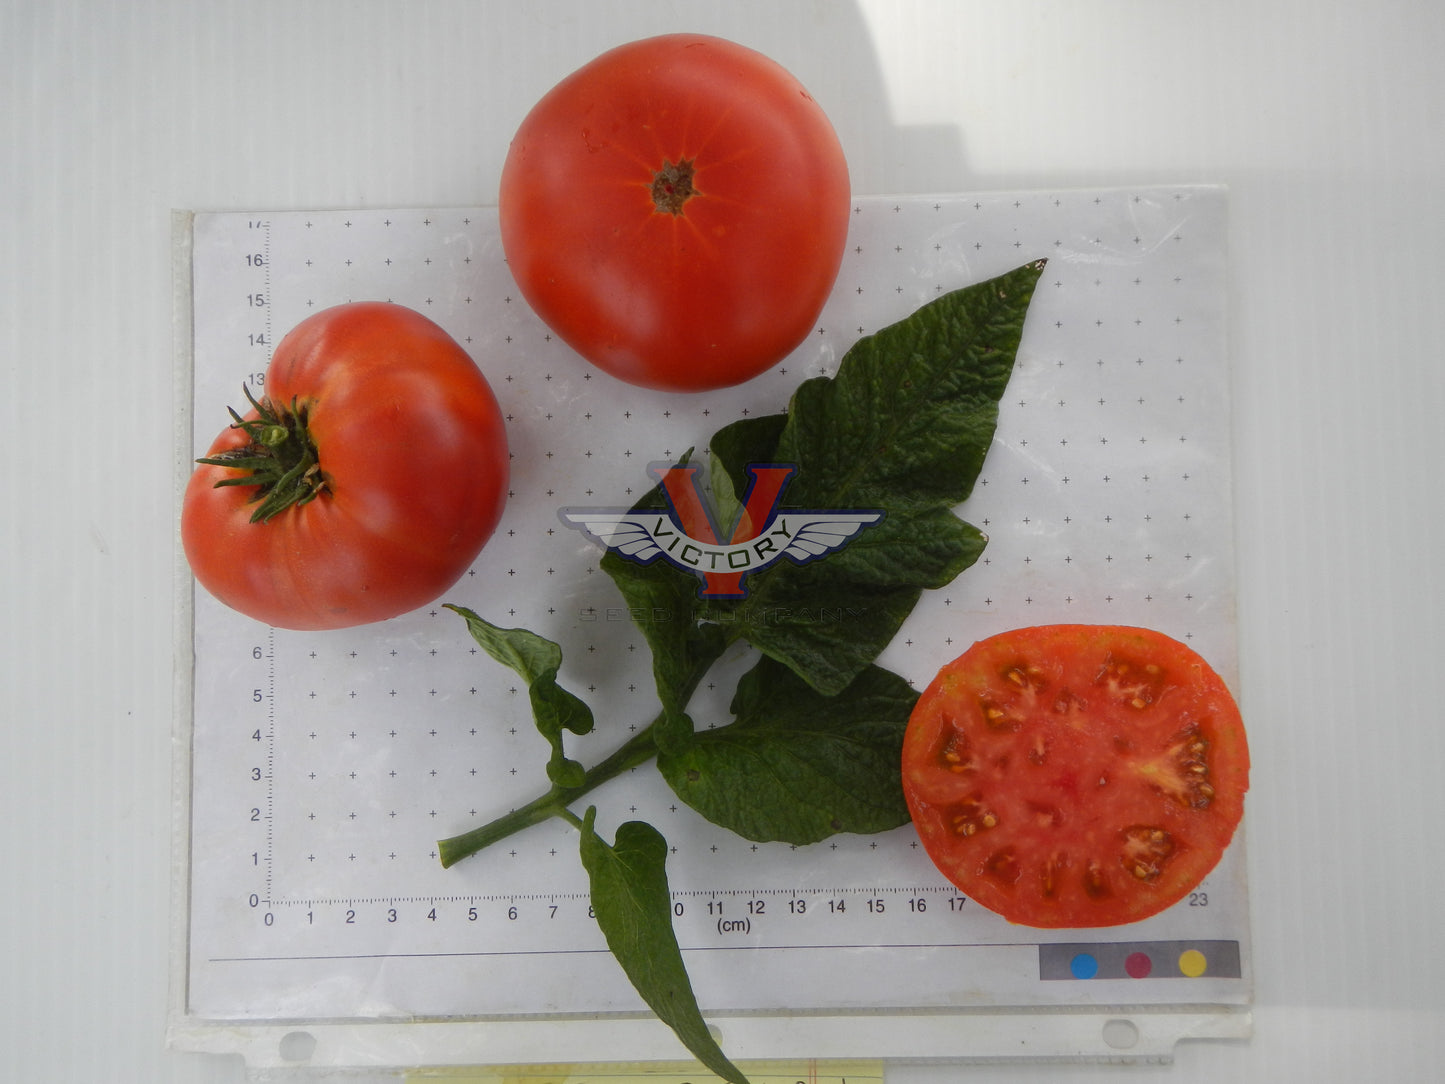 Vegetable Tomato 'Jet Star' Slicing Tomato from Sedan Floral